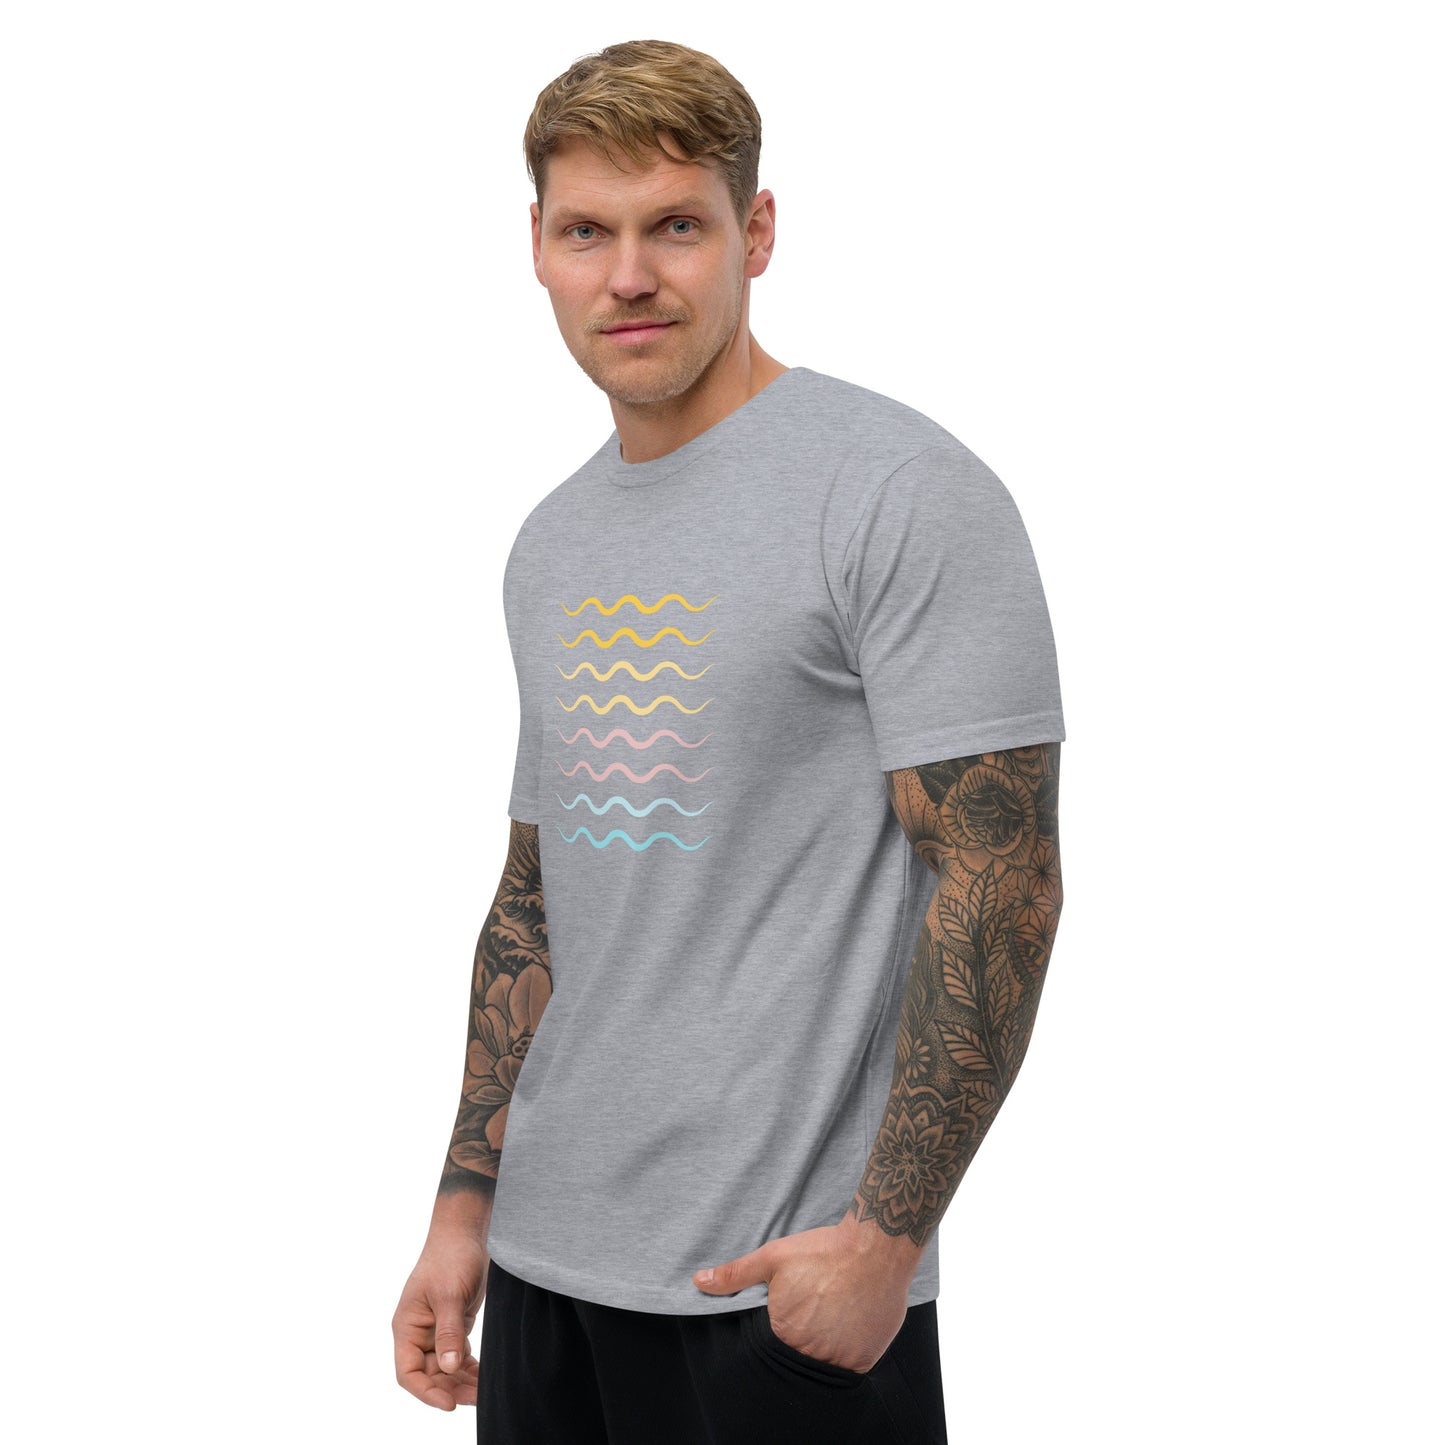 Wavy Short Sleeve T-shirt